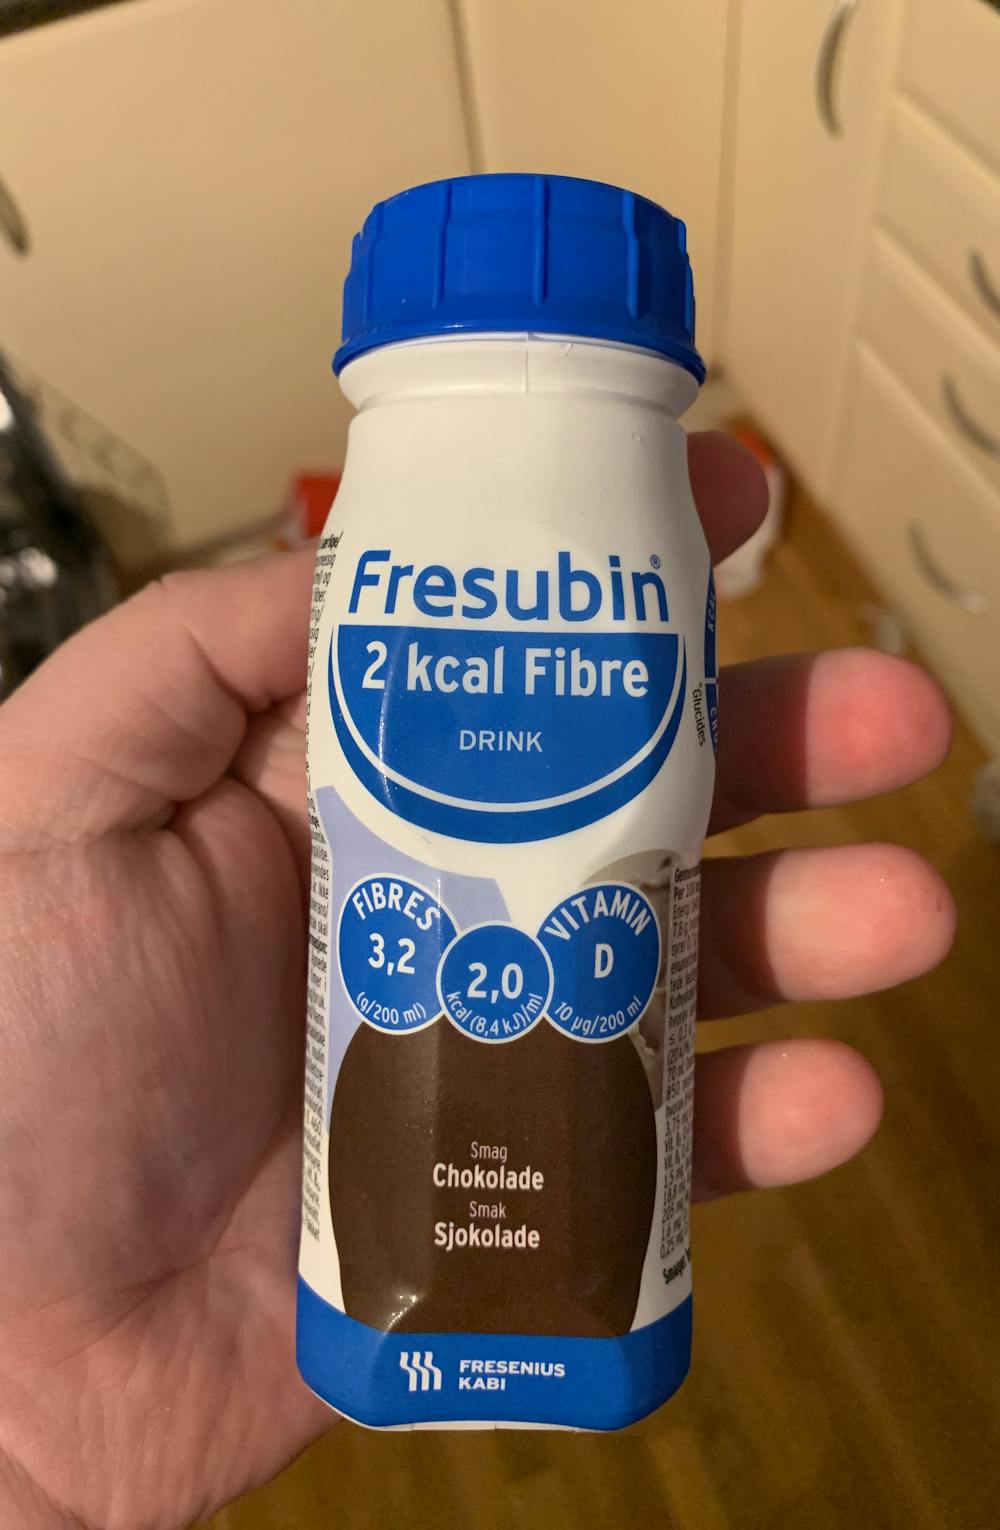 Fresubin 2 kcal drink Fibre, sjokolade, Fresenius kabi